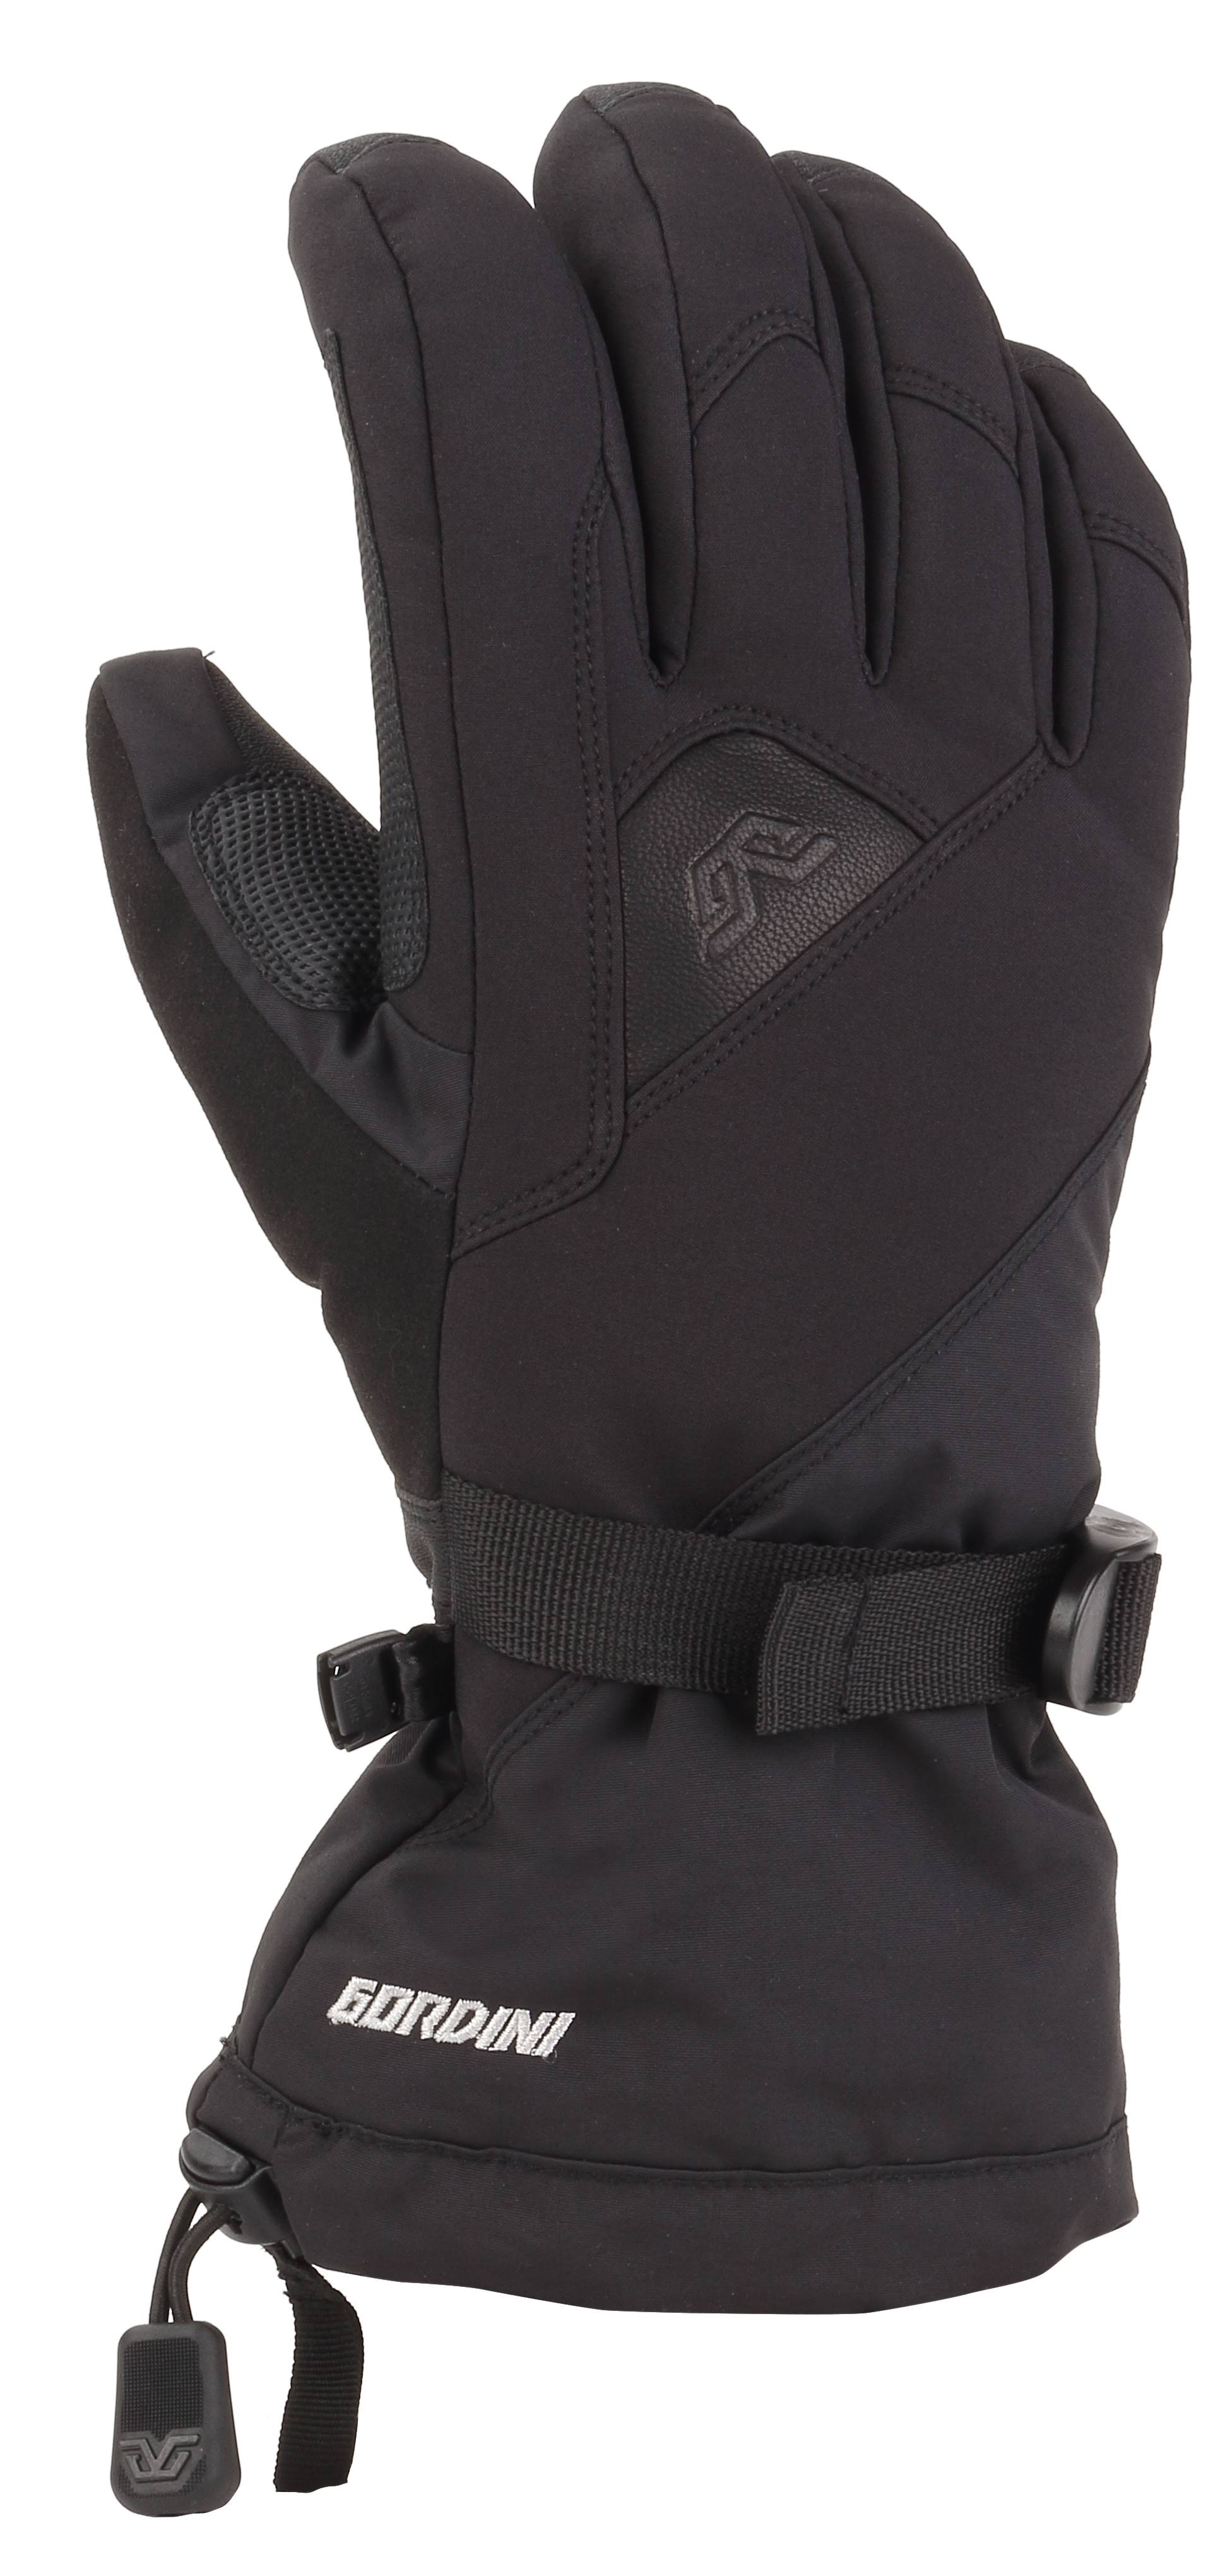 Gordini Women's Aquabloc Down Gauntlet Gloves Black S